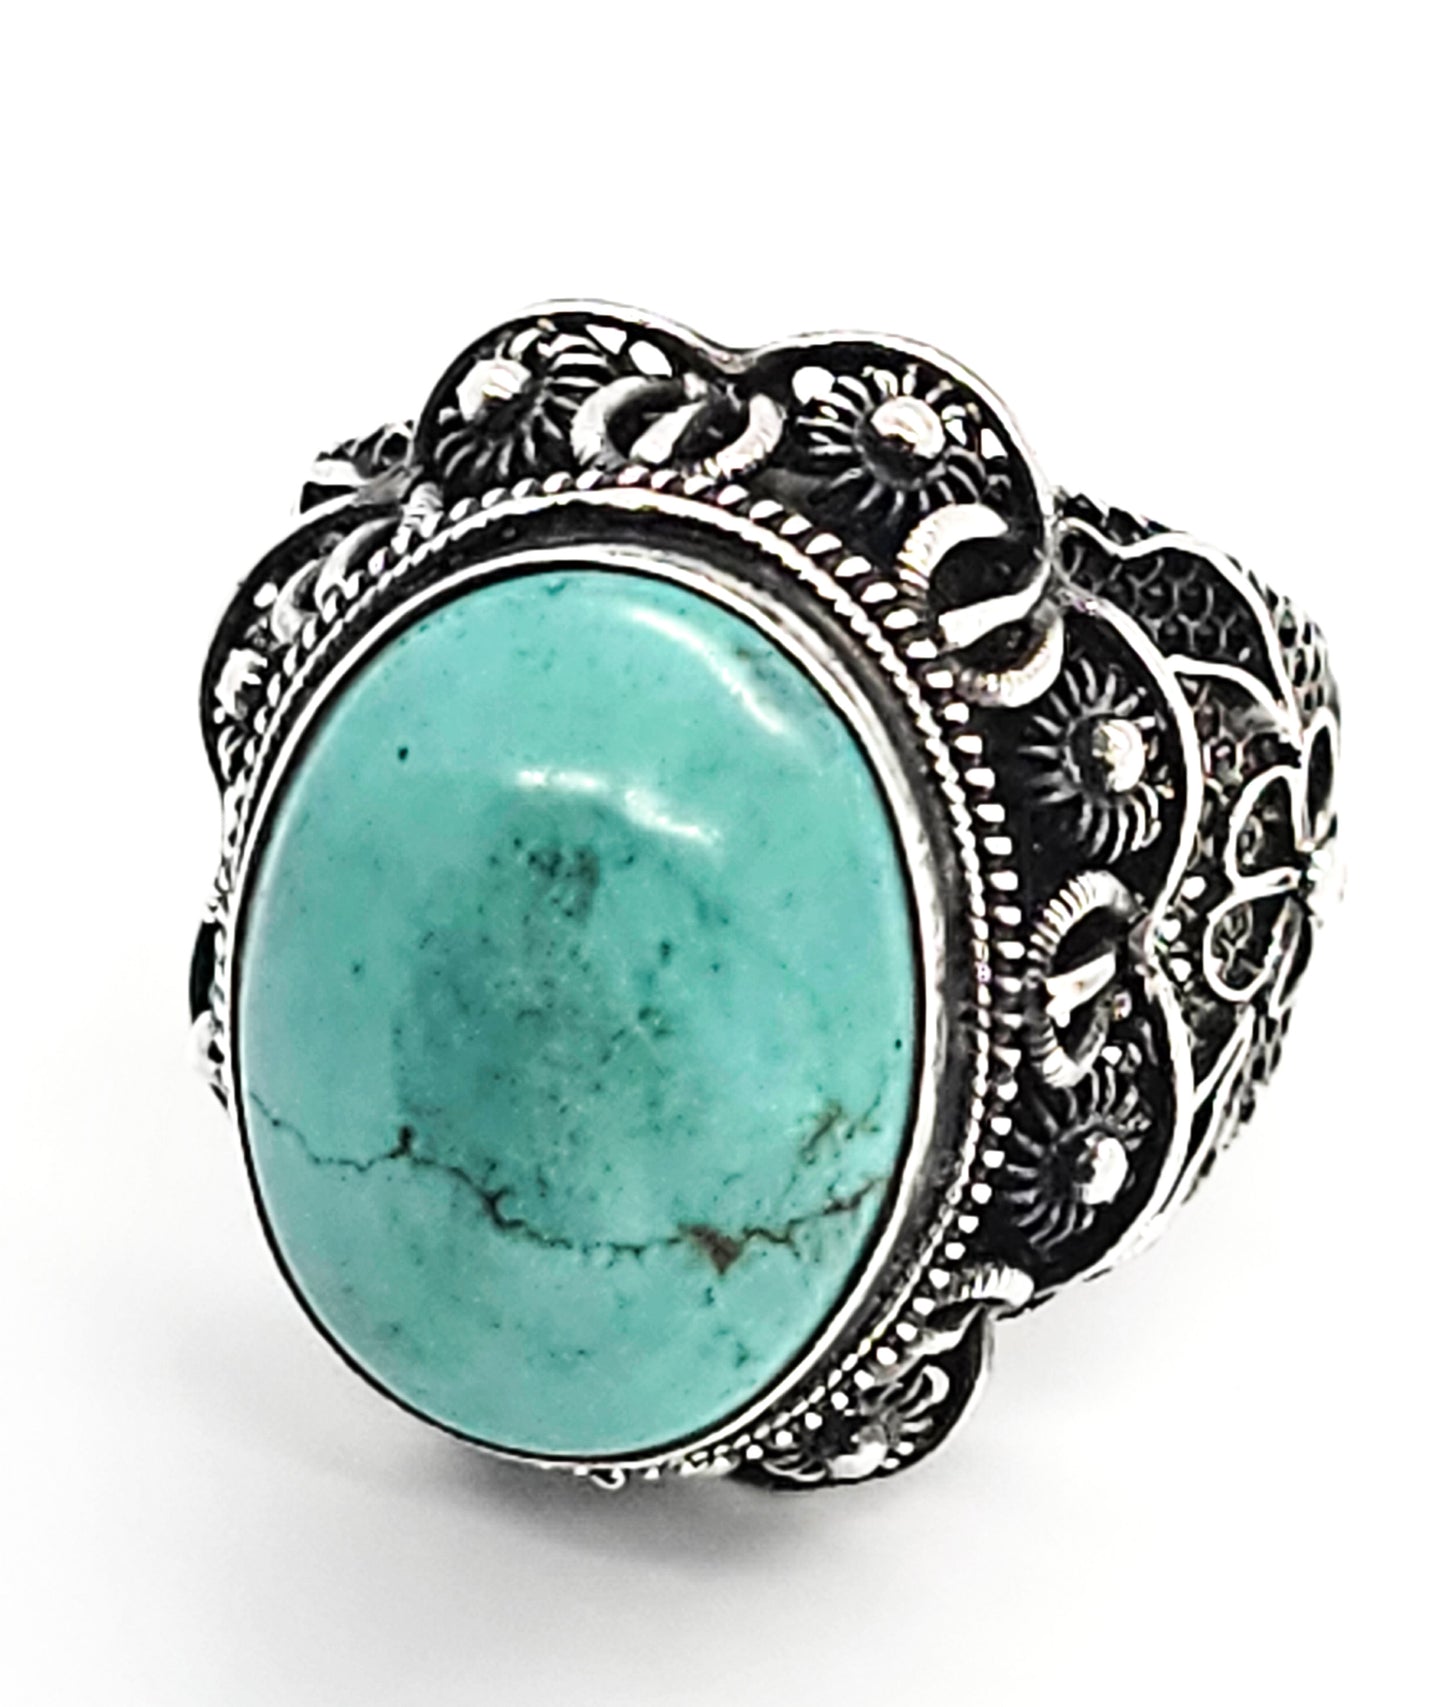 Turquoise filigree large sterling silver gemstone ring signed BJ size 6.5